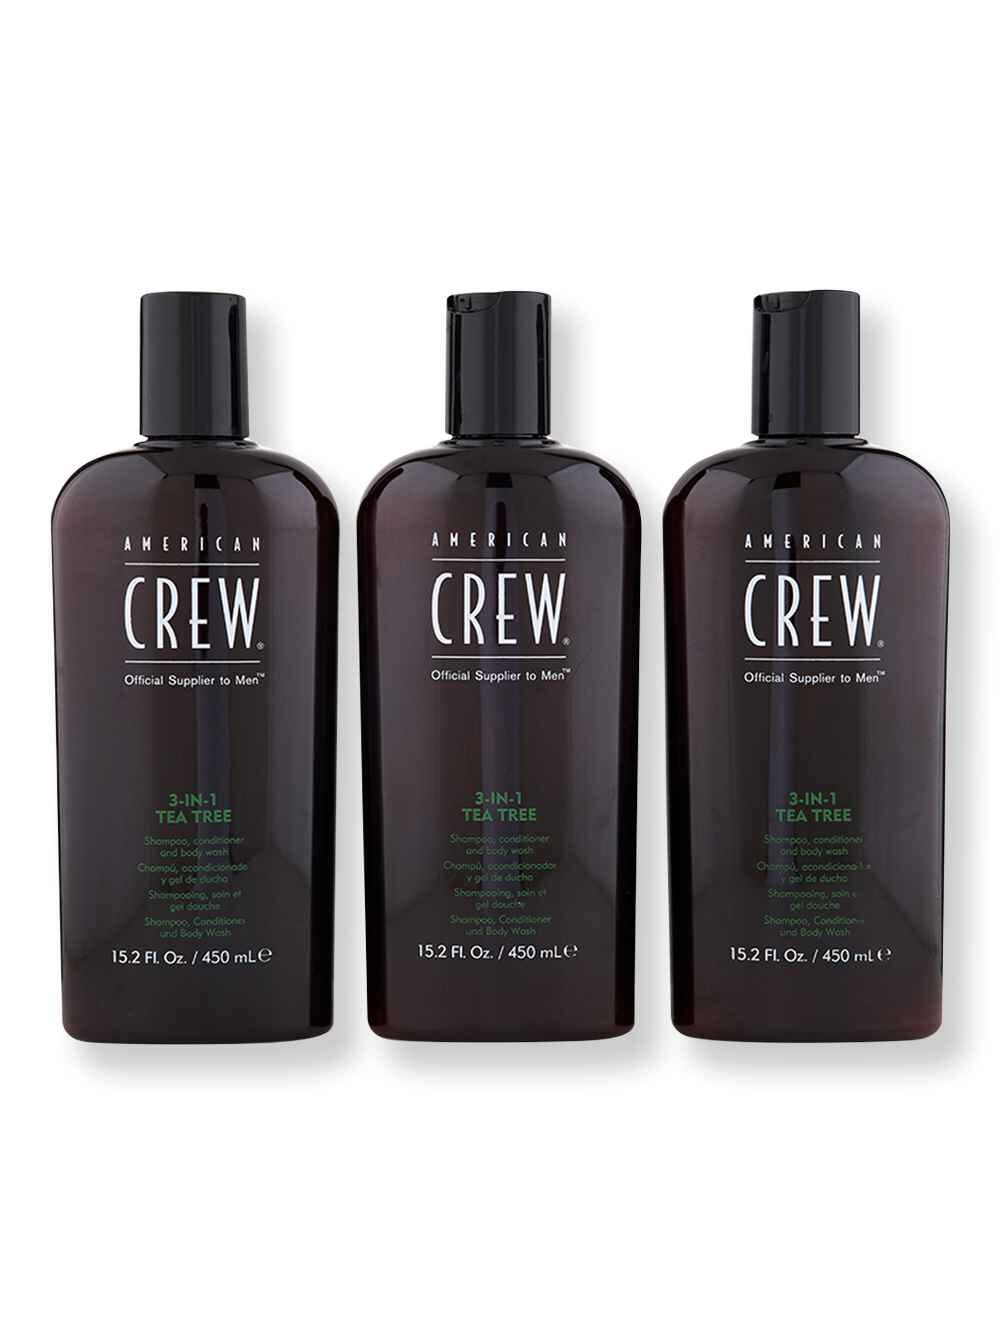 American Crew American Crew 3-in-1 Tea Tree 3 Ct 15.2 oz Shampoos 